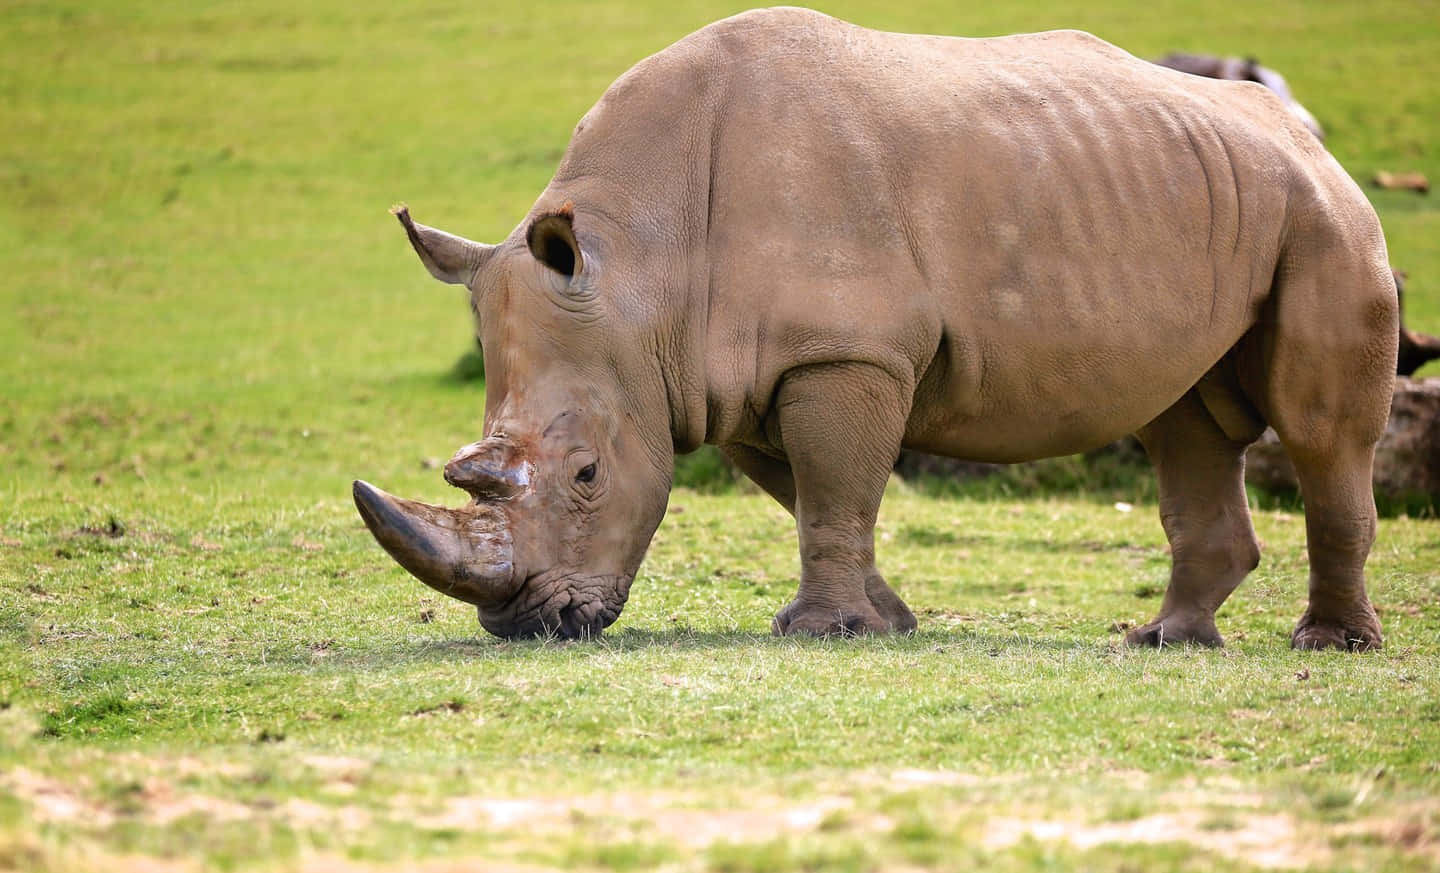 A Rhino In Its Natural Habitat